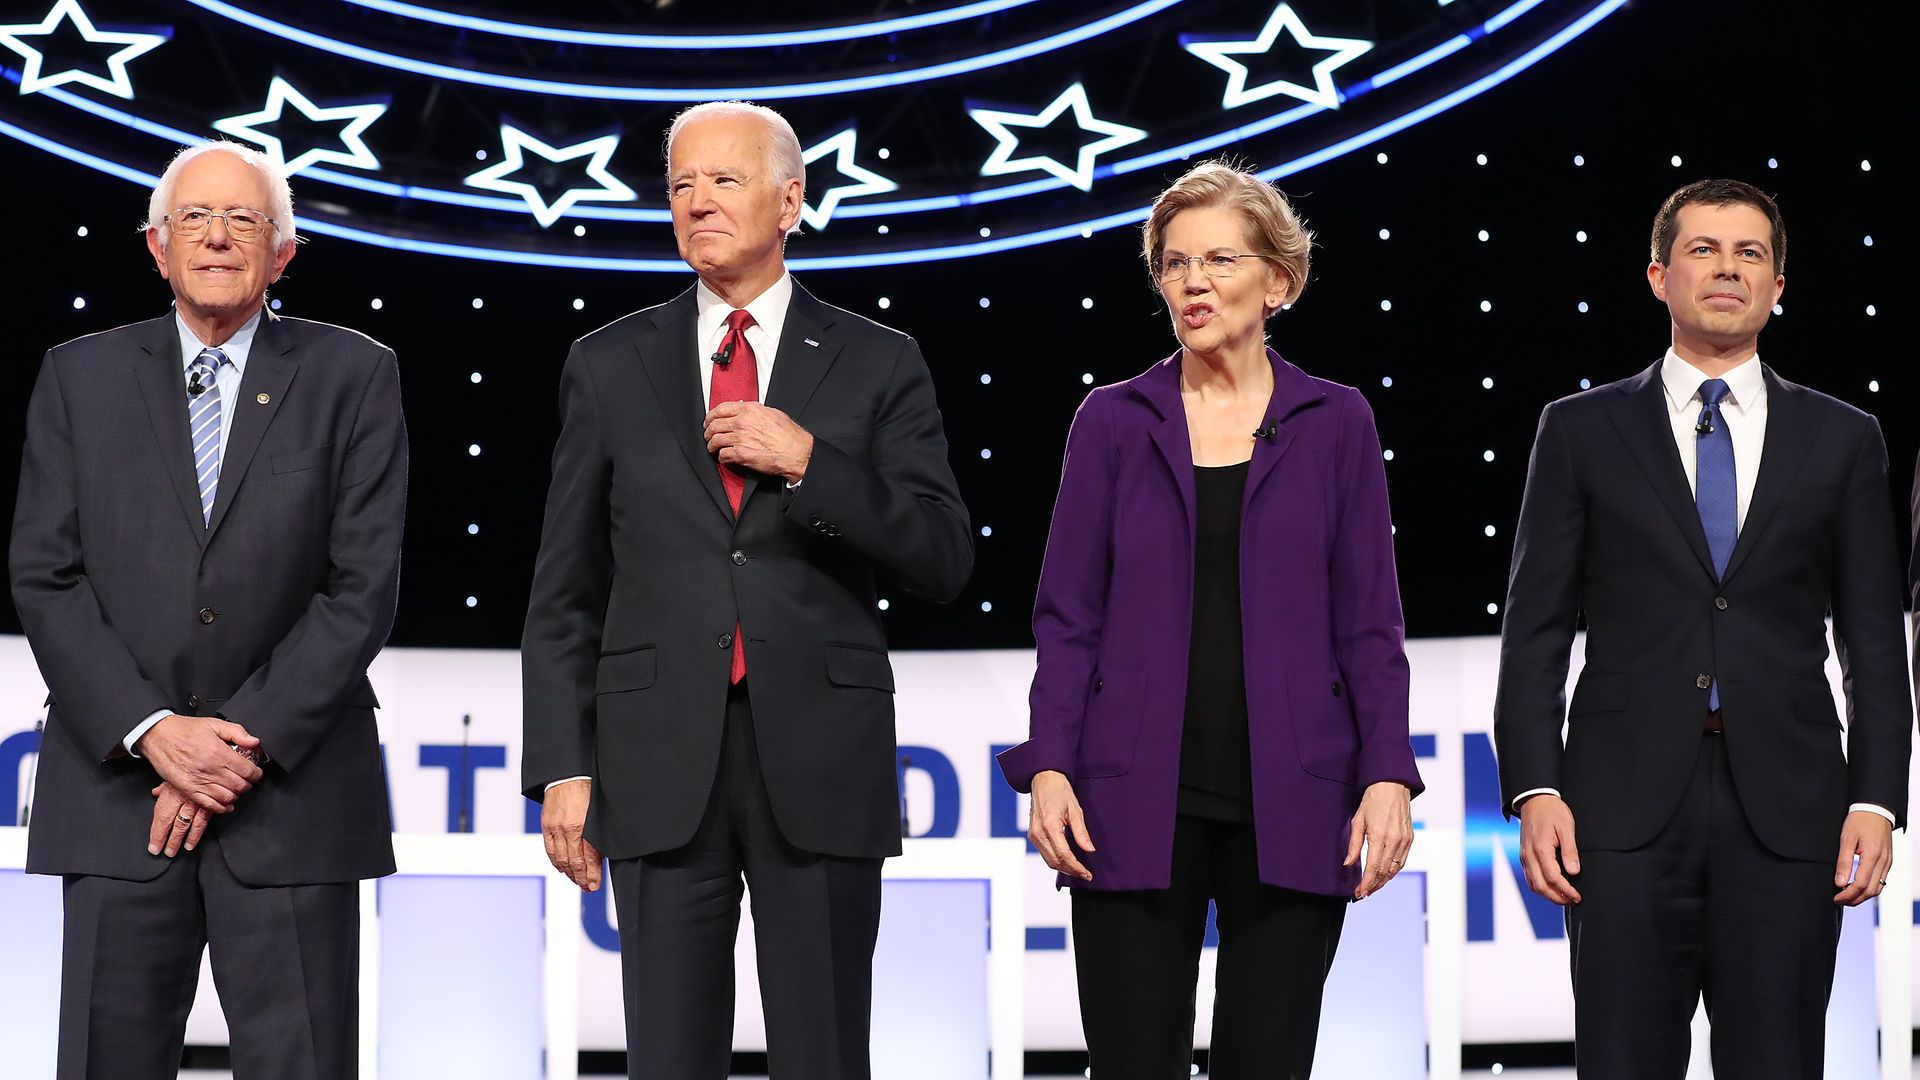 Sen. Bernie Sanders, Joe Biden, Sen. Elizabeth Warren and Pete Buttigieg at the start of the Democratic Presidential Debate at Otterbein University on October 15, 2019 in Westerville, Ohio.